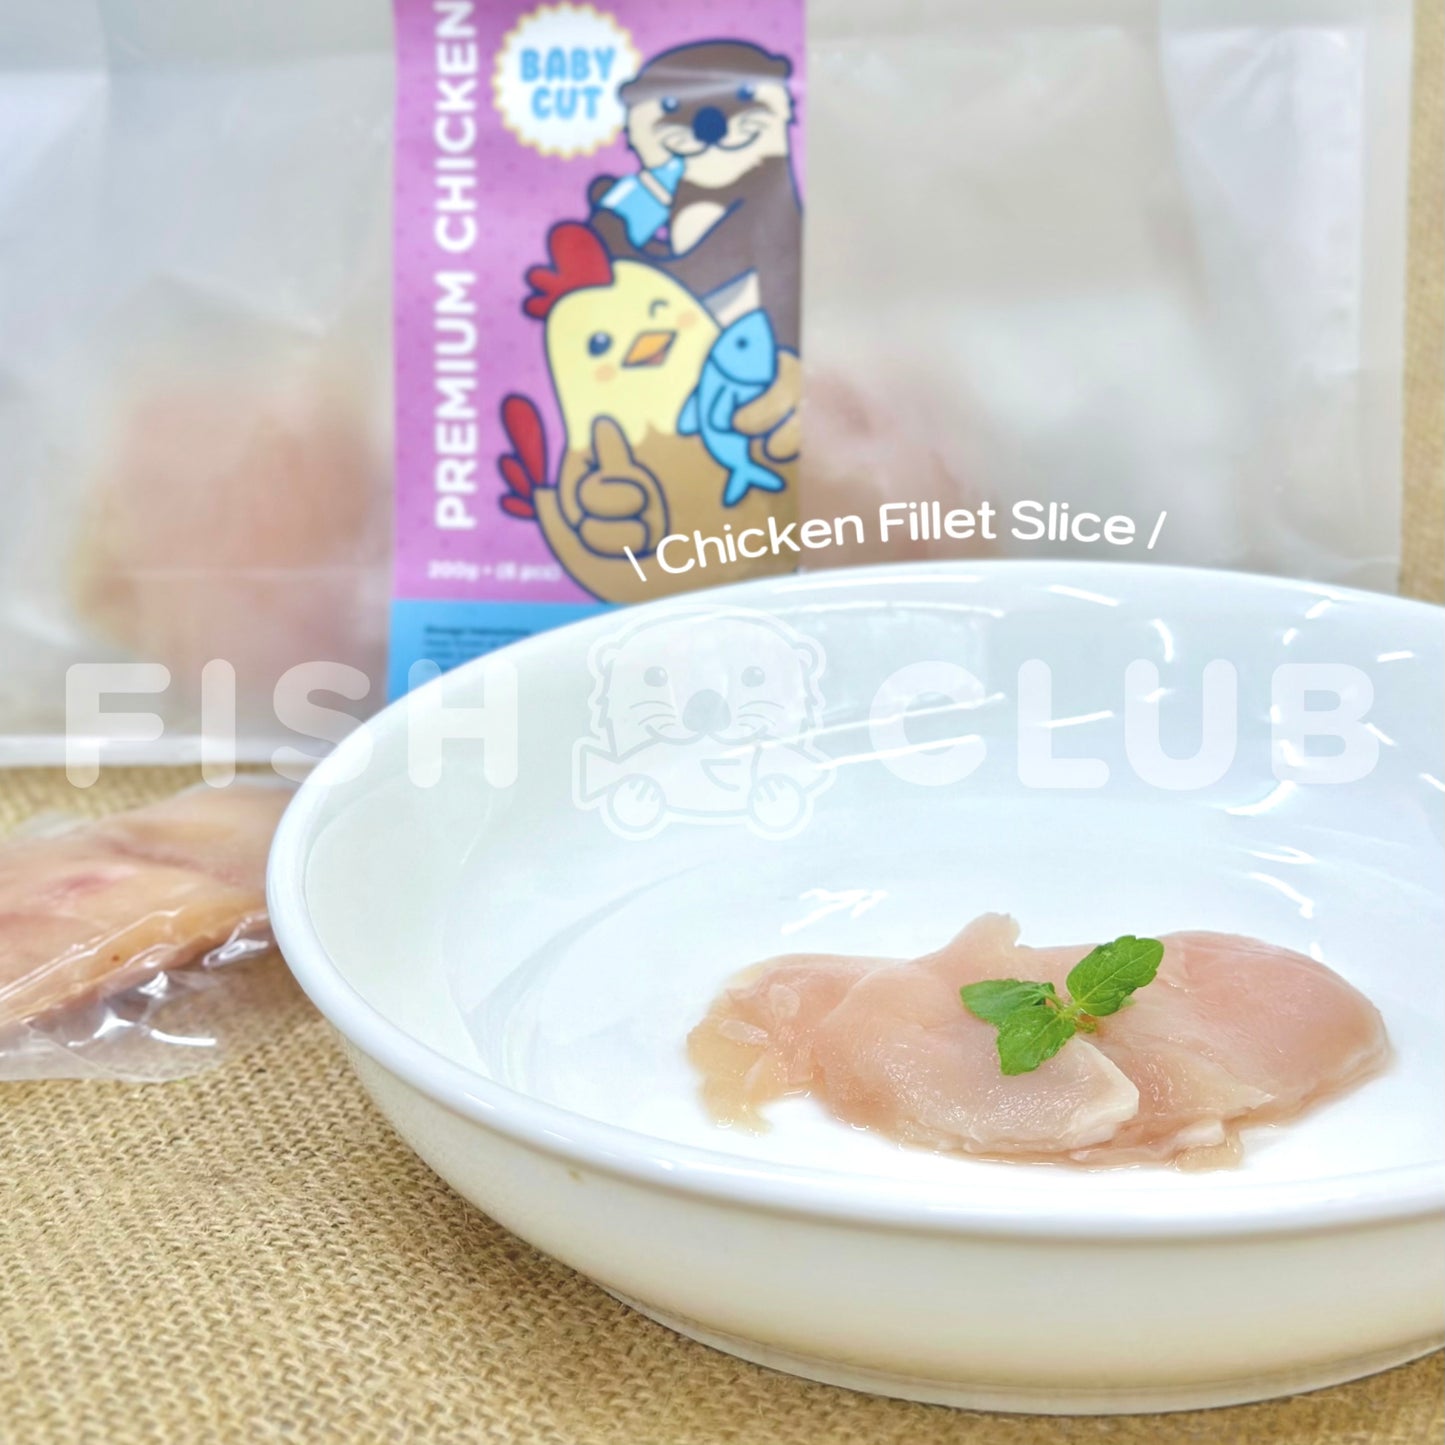 Fish Club x Gintori Chicken Fillet Slice (Baby Cut) - 200g (6pcs)